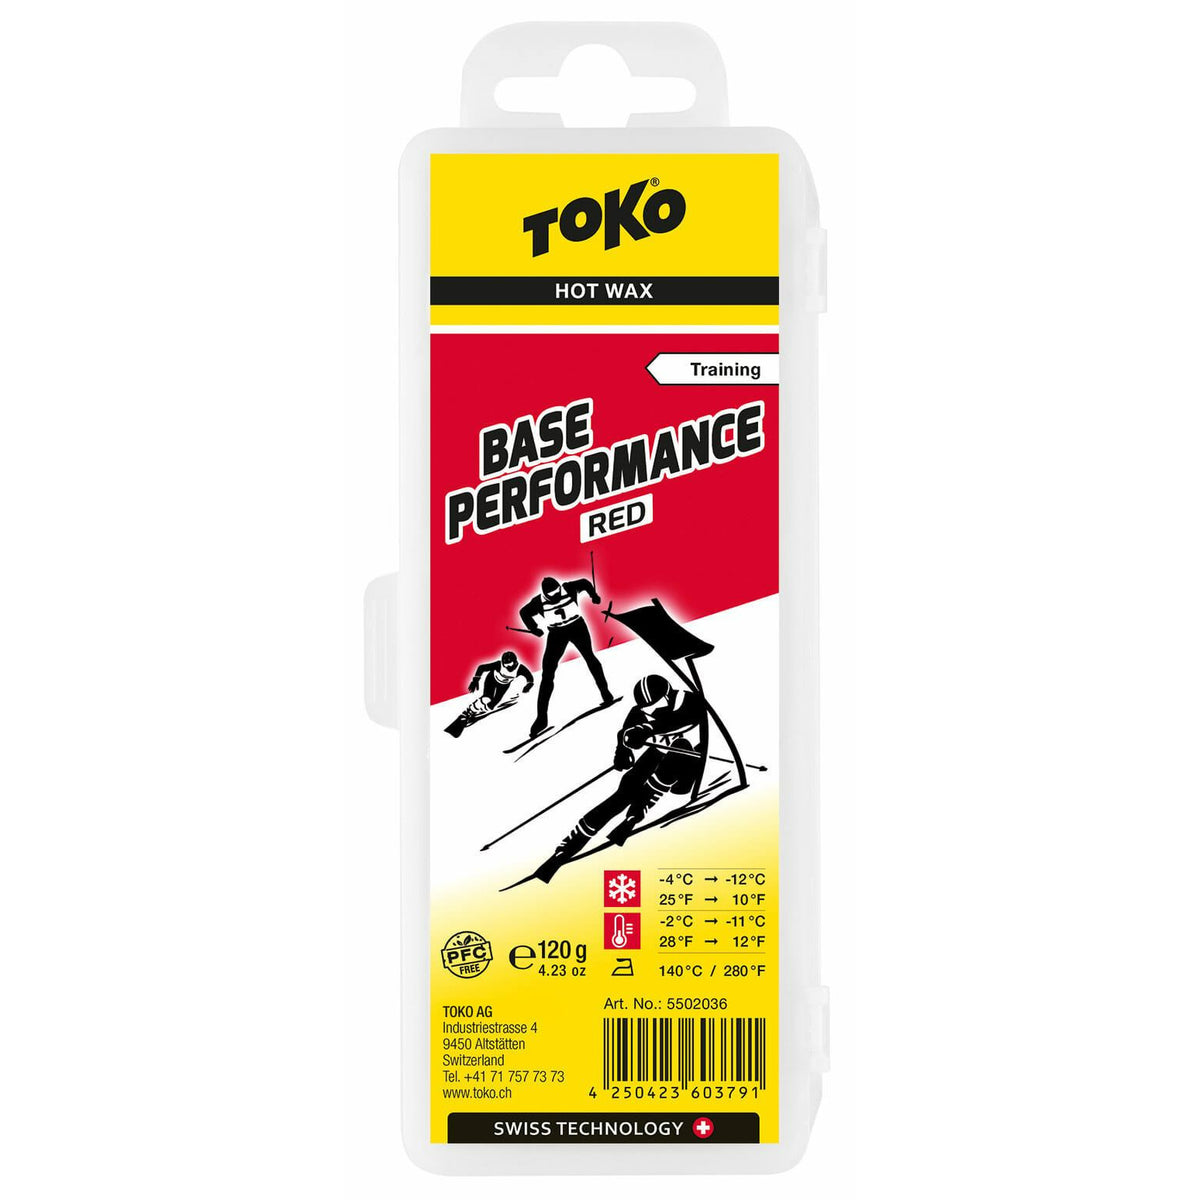 ToKo Base Performance Hot Wax red